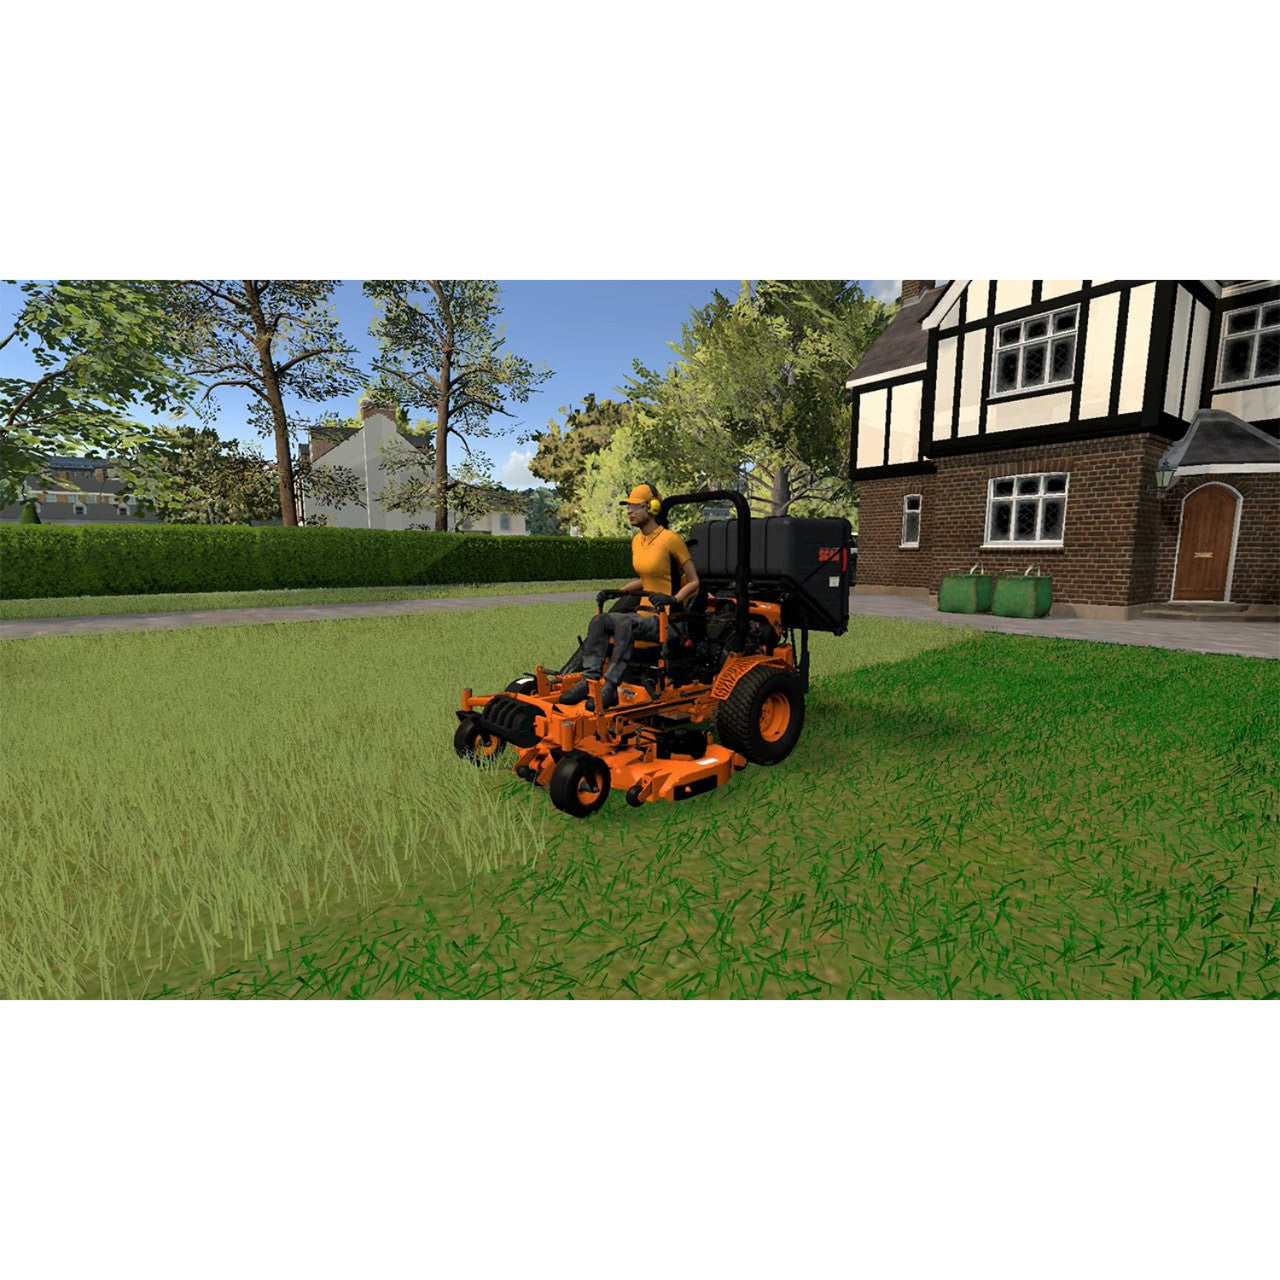 Lawn Mowing Simulator: Landmark Edition (Nintendo Switch)